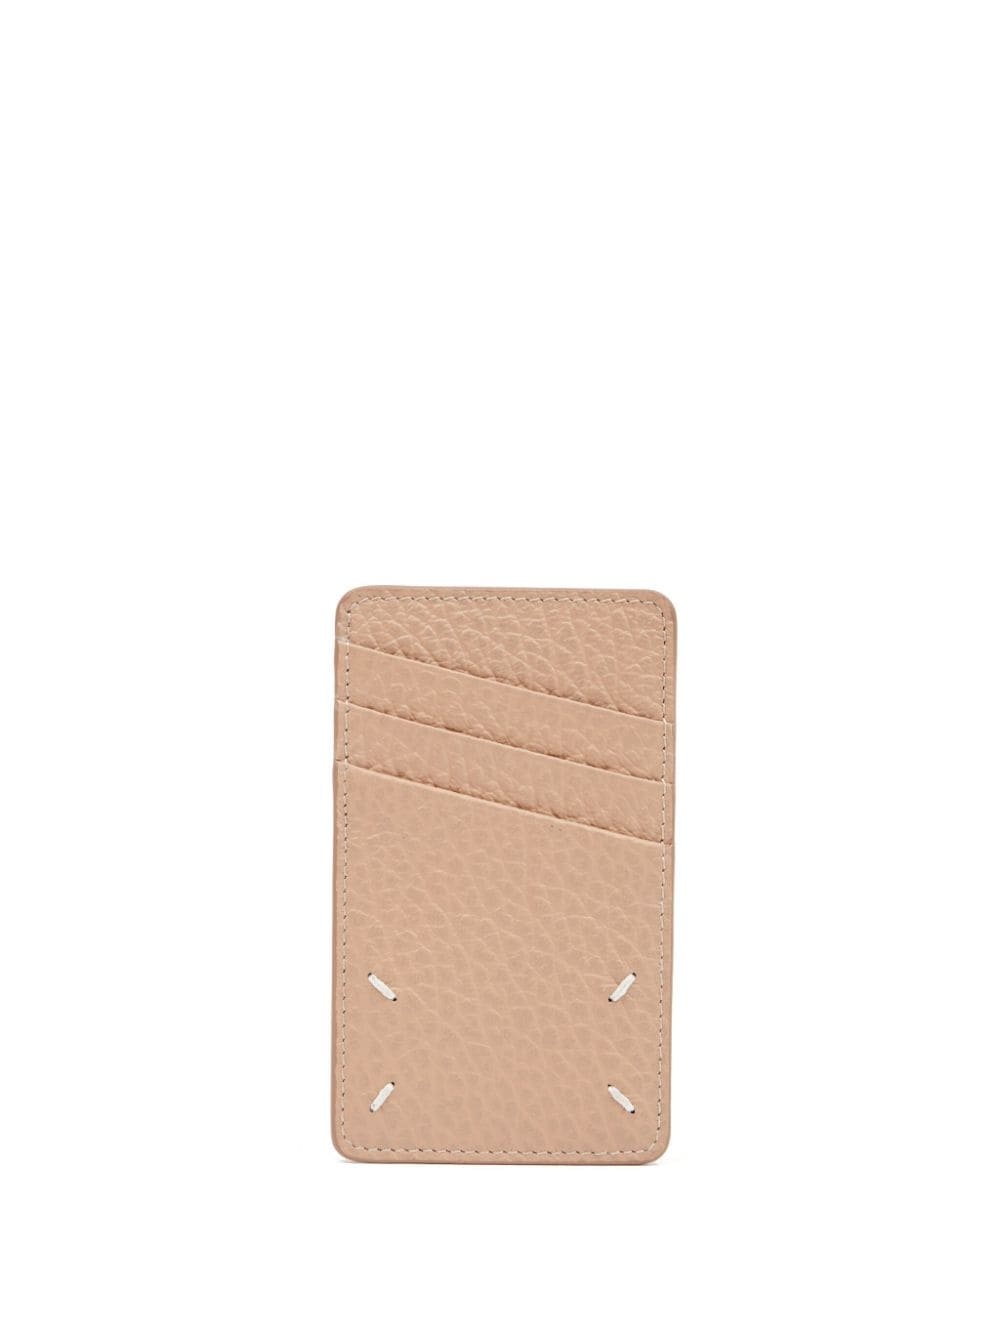 four-stitch leather cardholder - 2